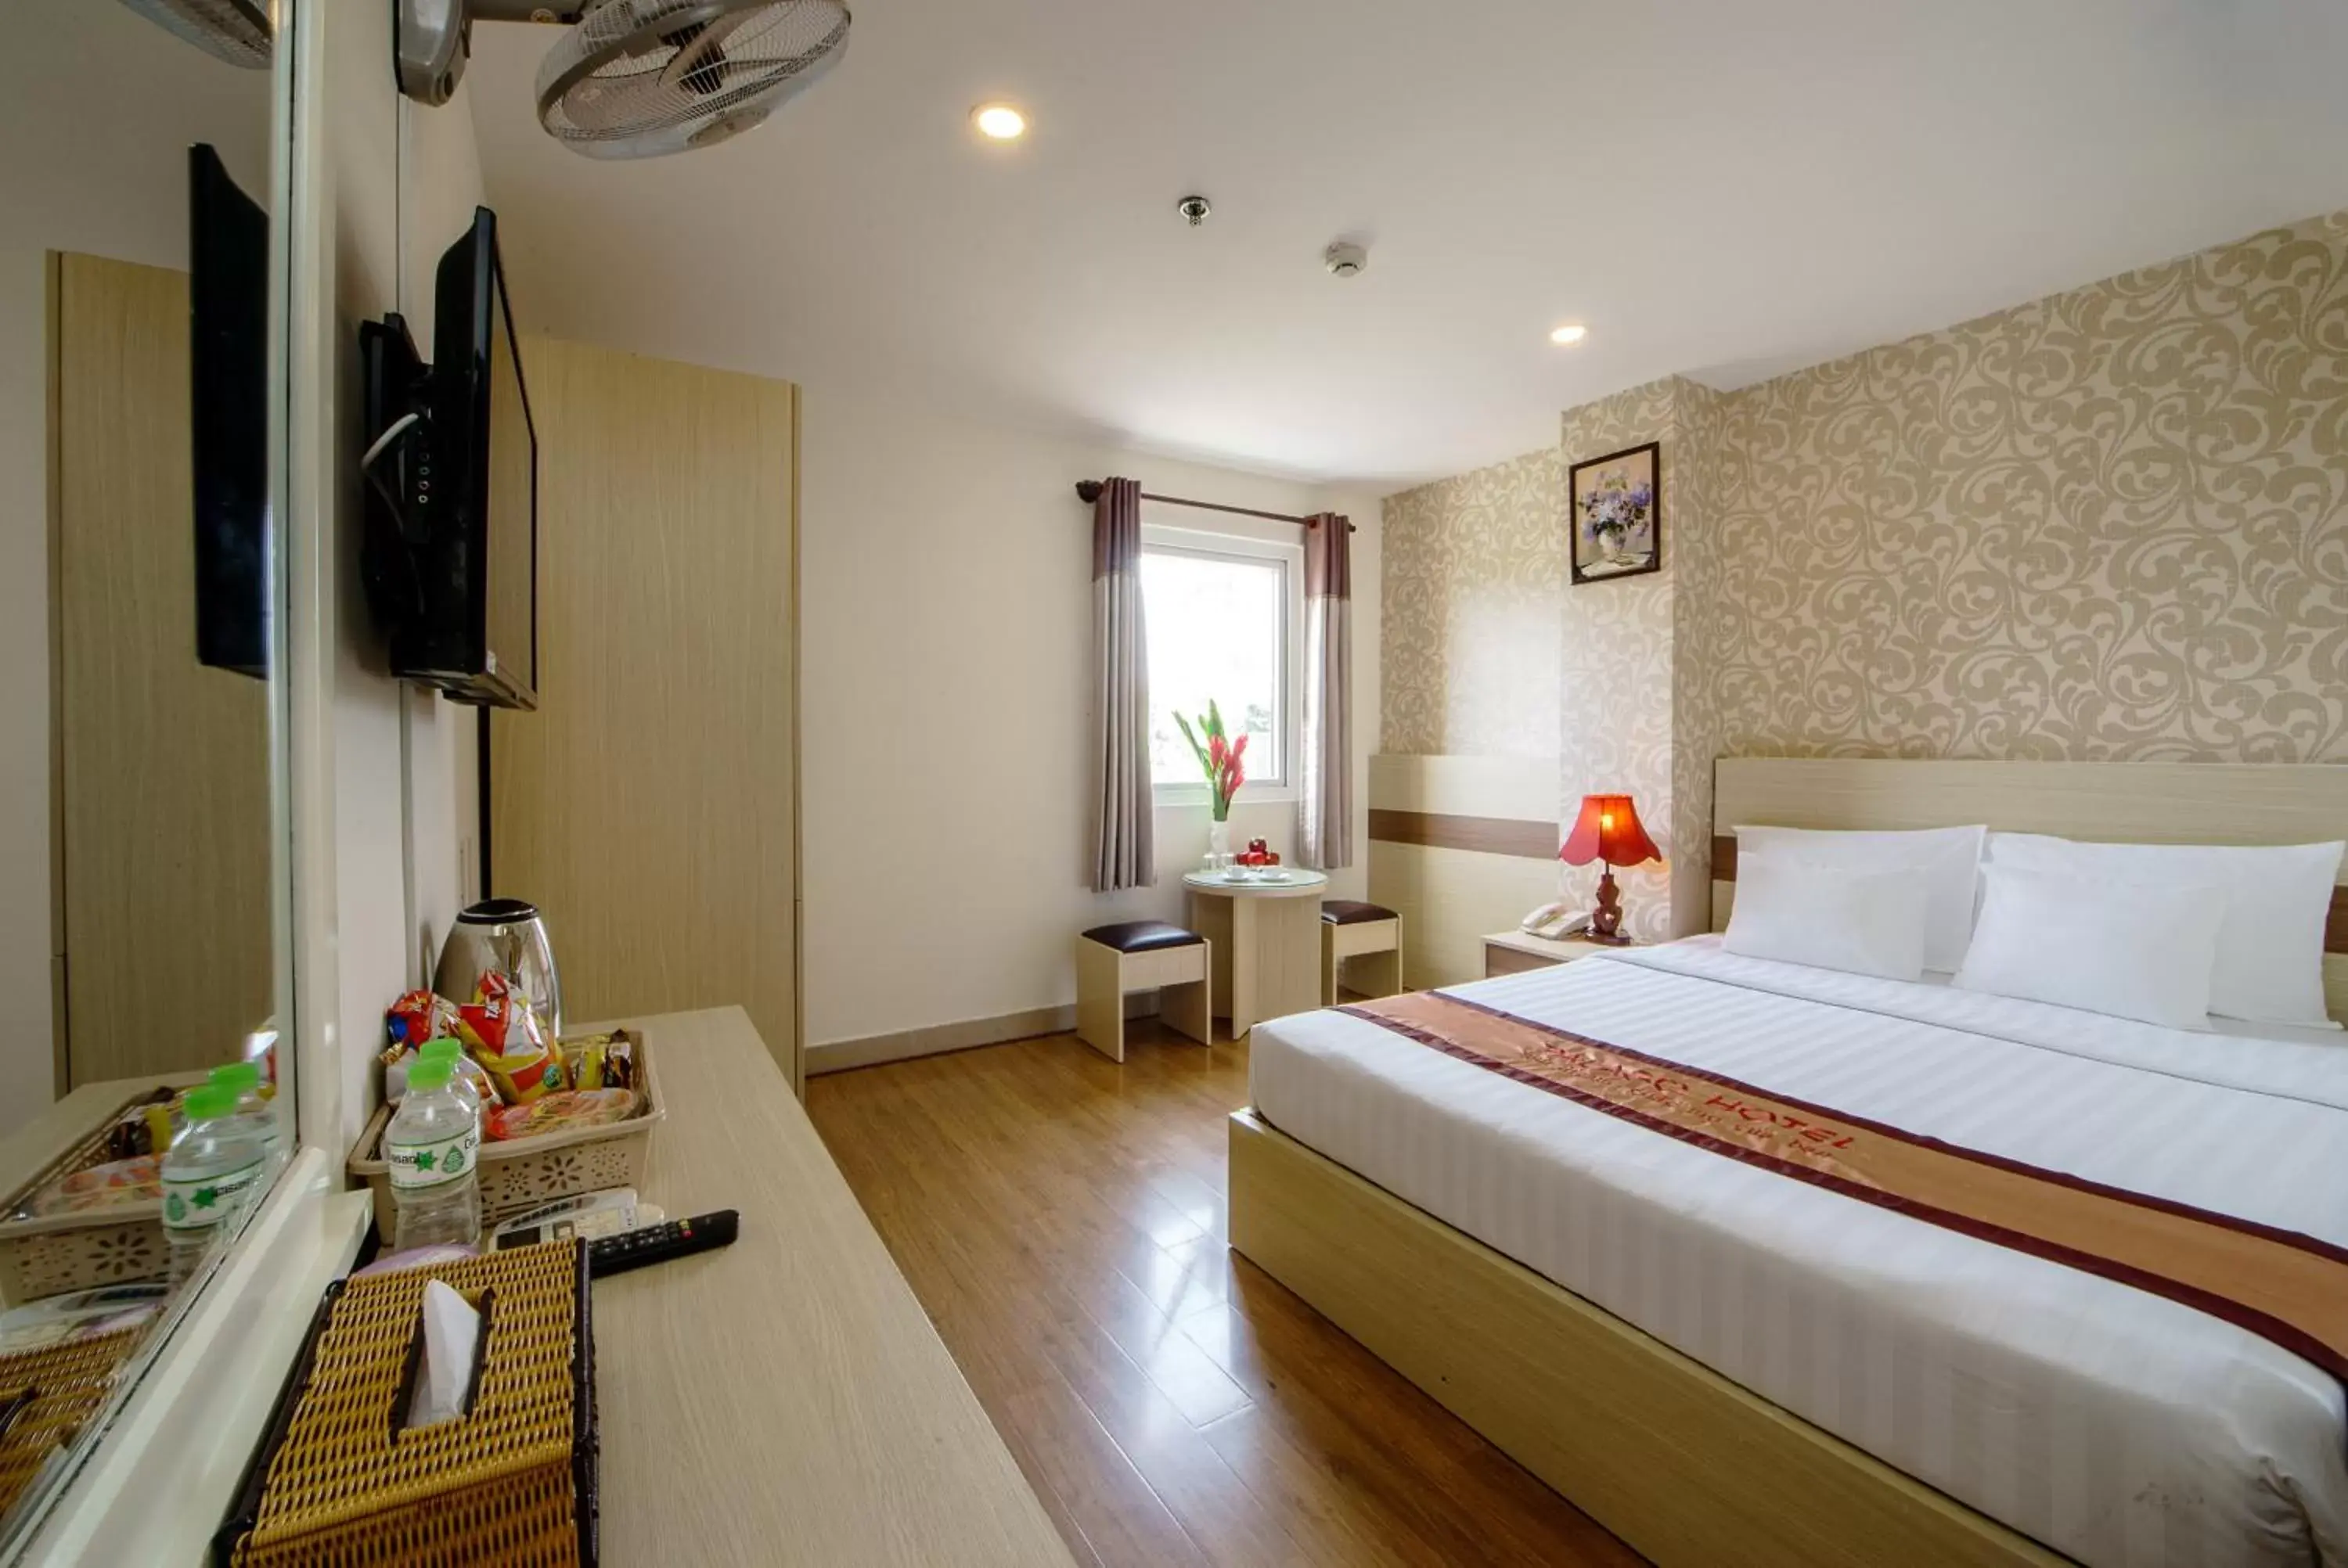 Bedroom in Palago Hotel